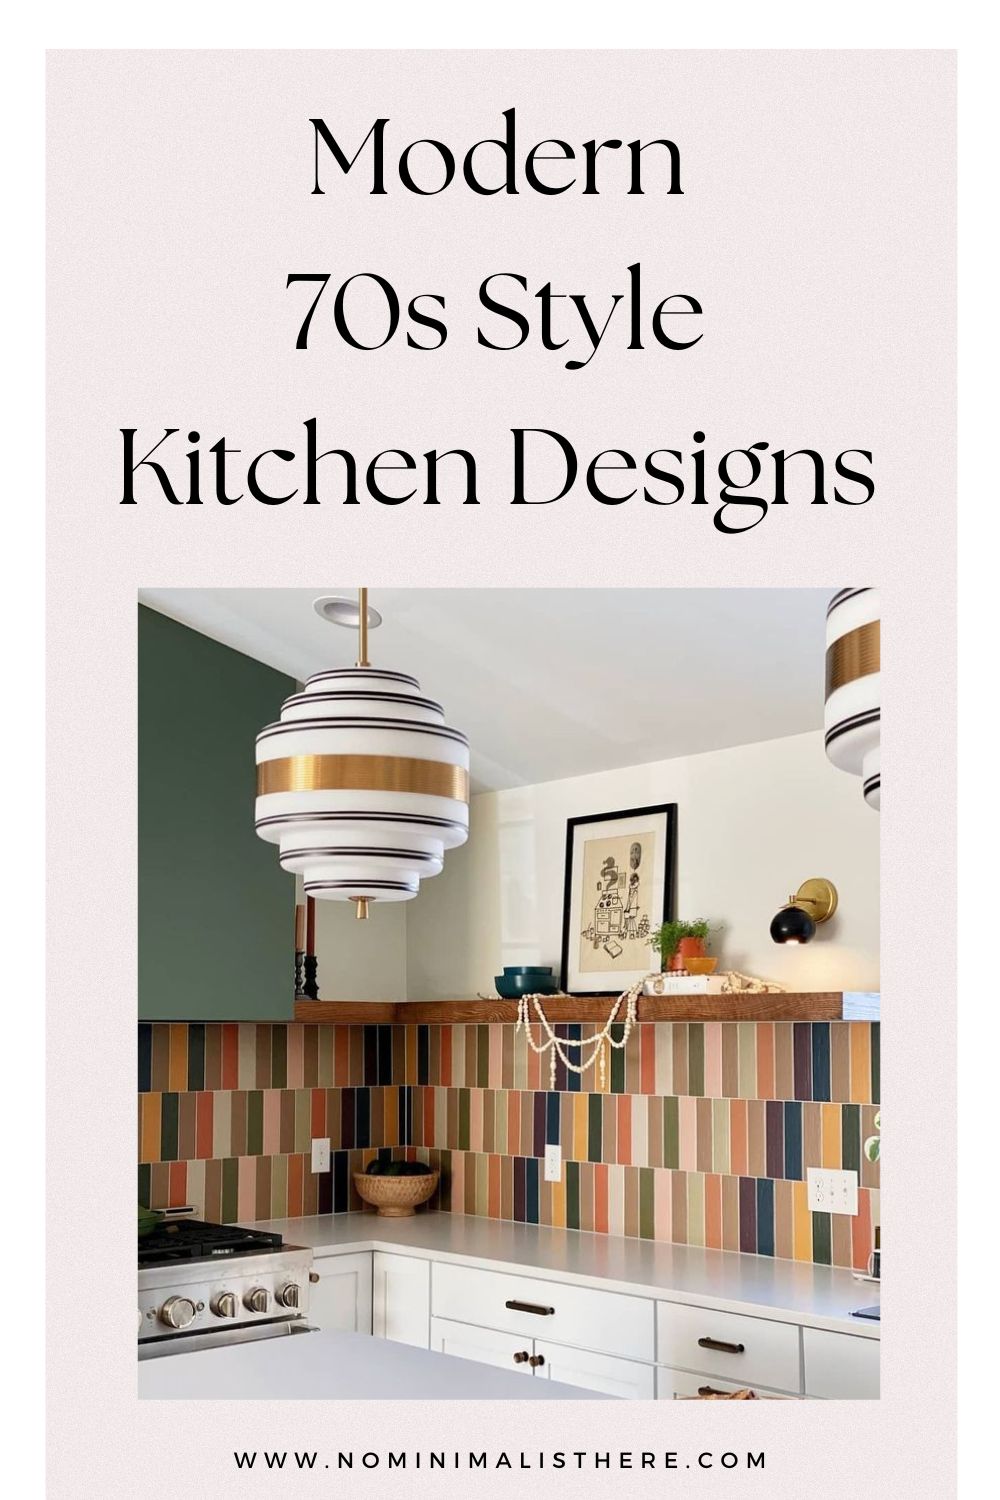 pinterest image about Modern 70s Style Kitchen Designs